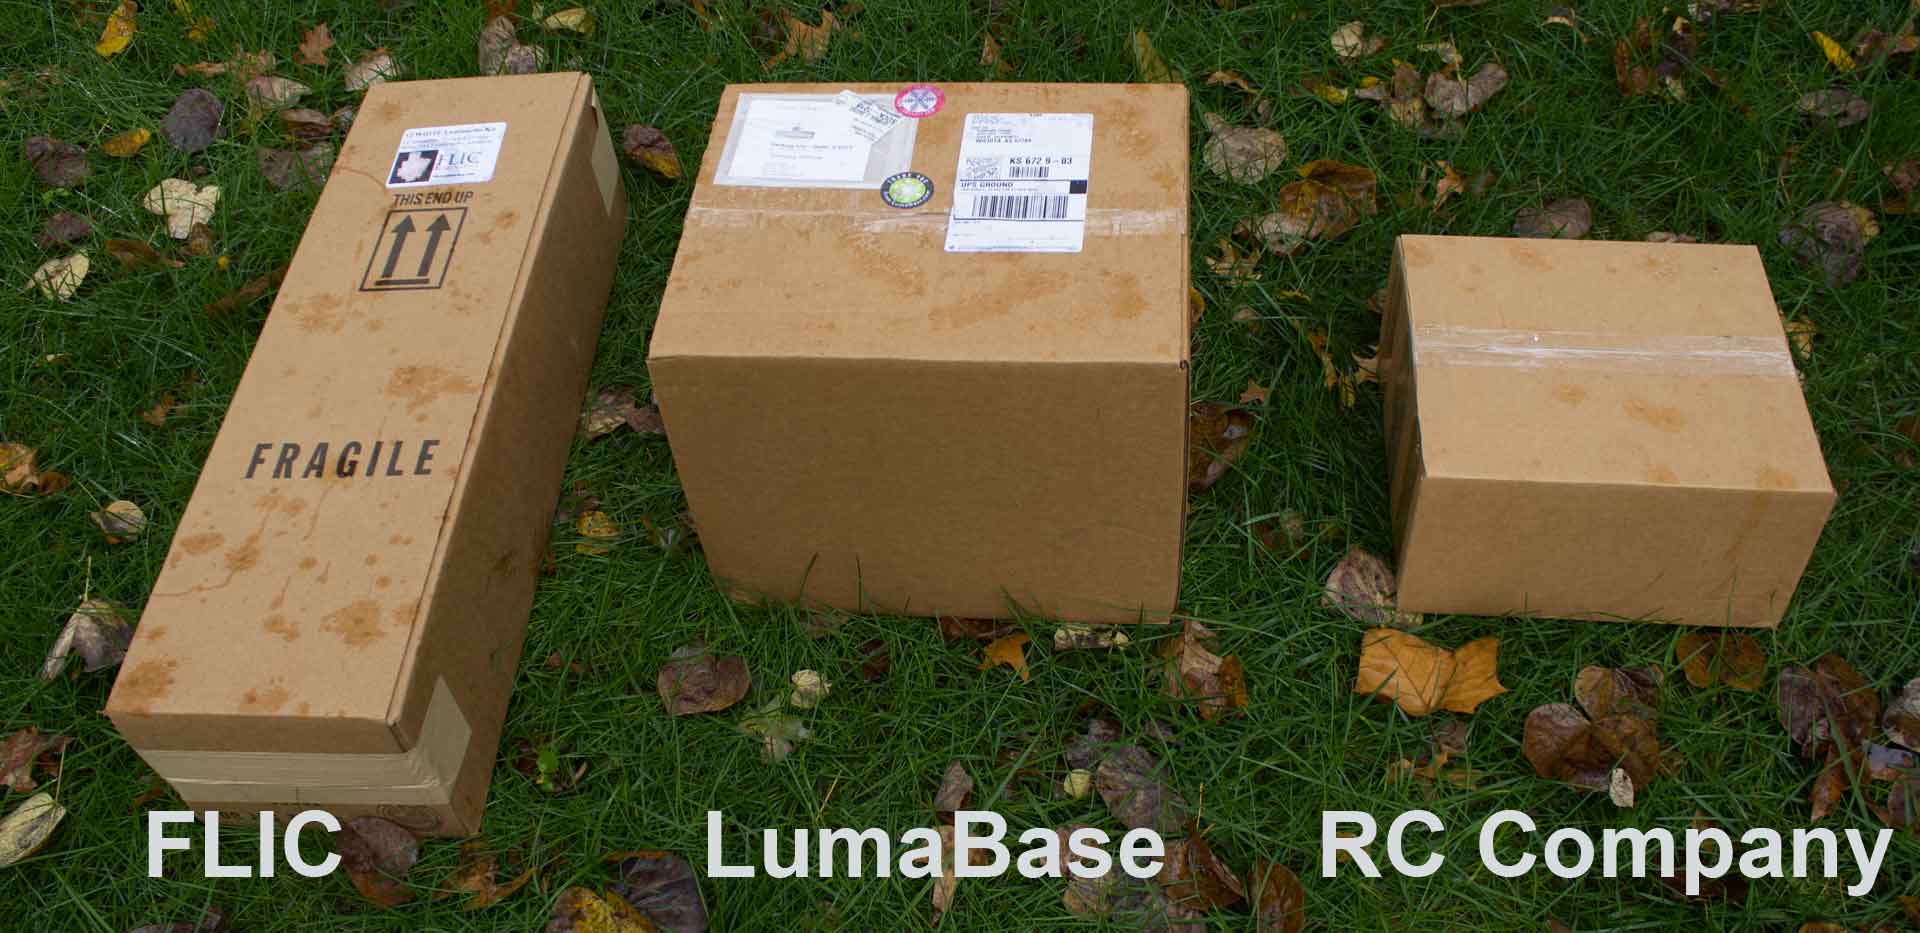 Compare luminaries shipping boxes